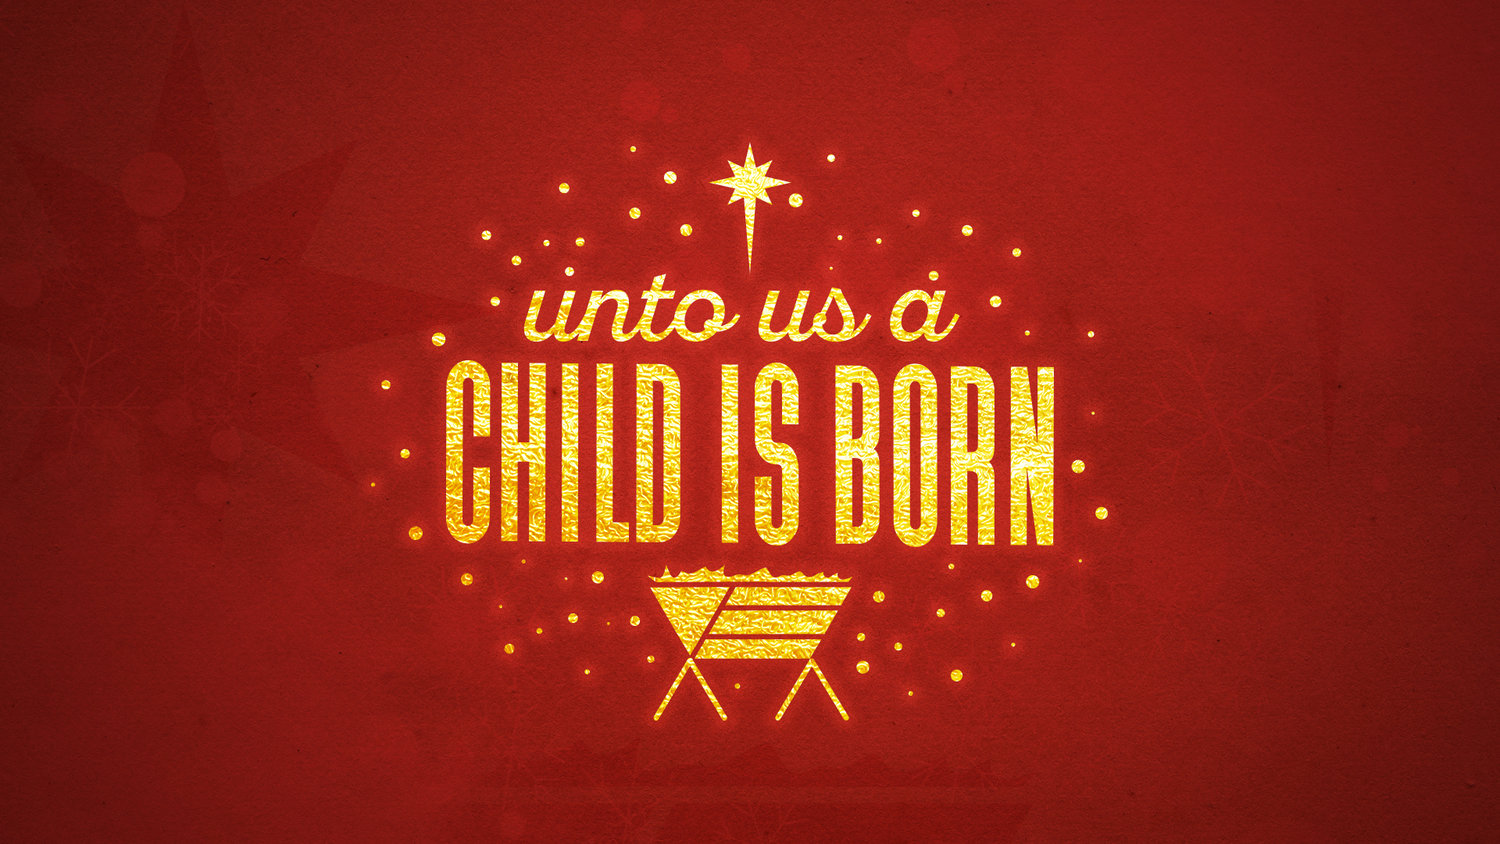 Unto Us a Child is Born – Hope